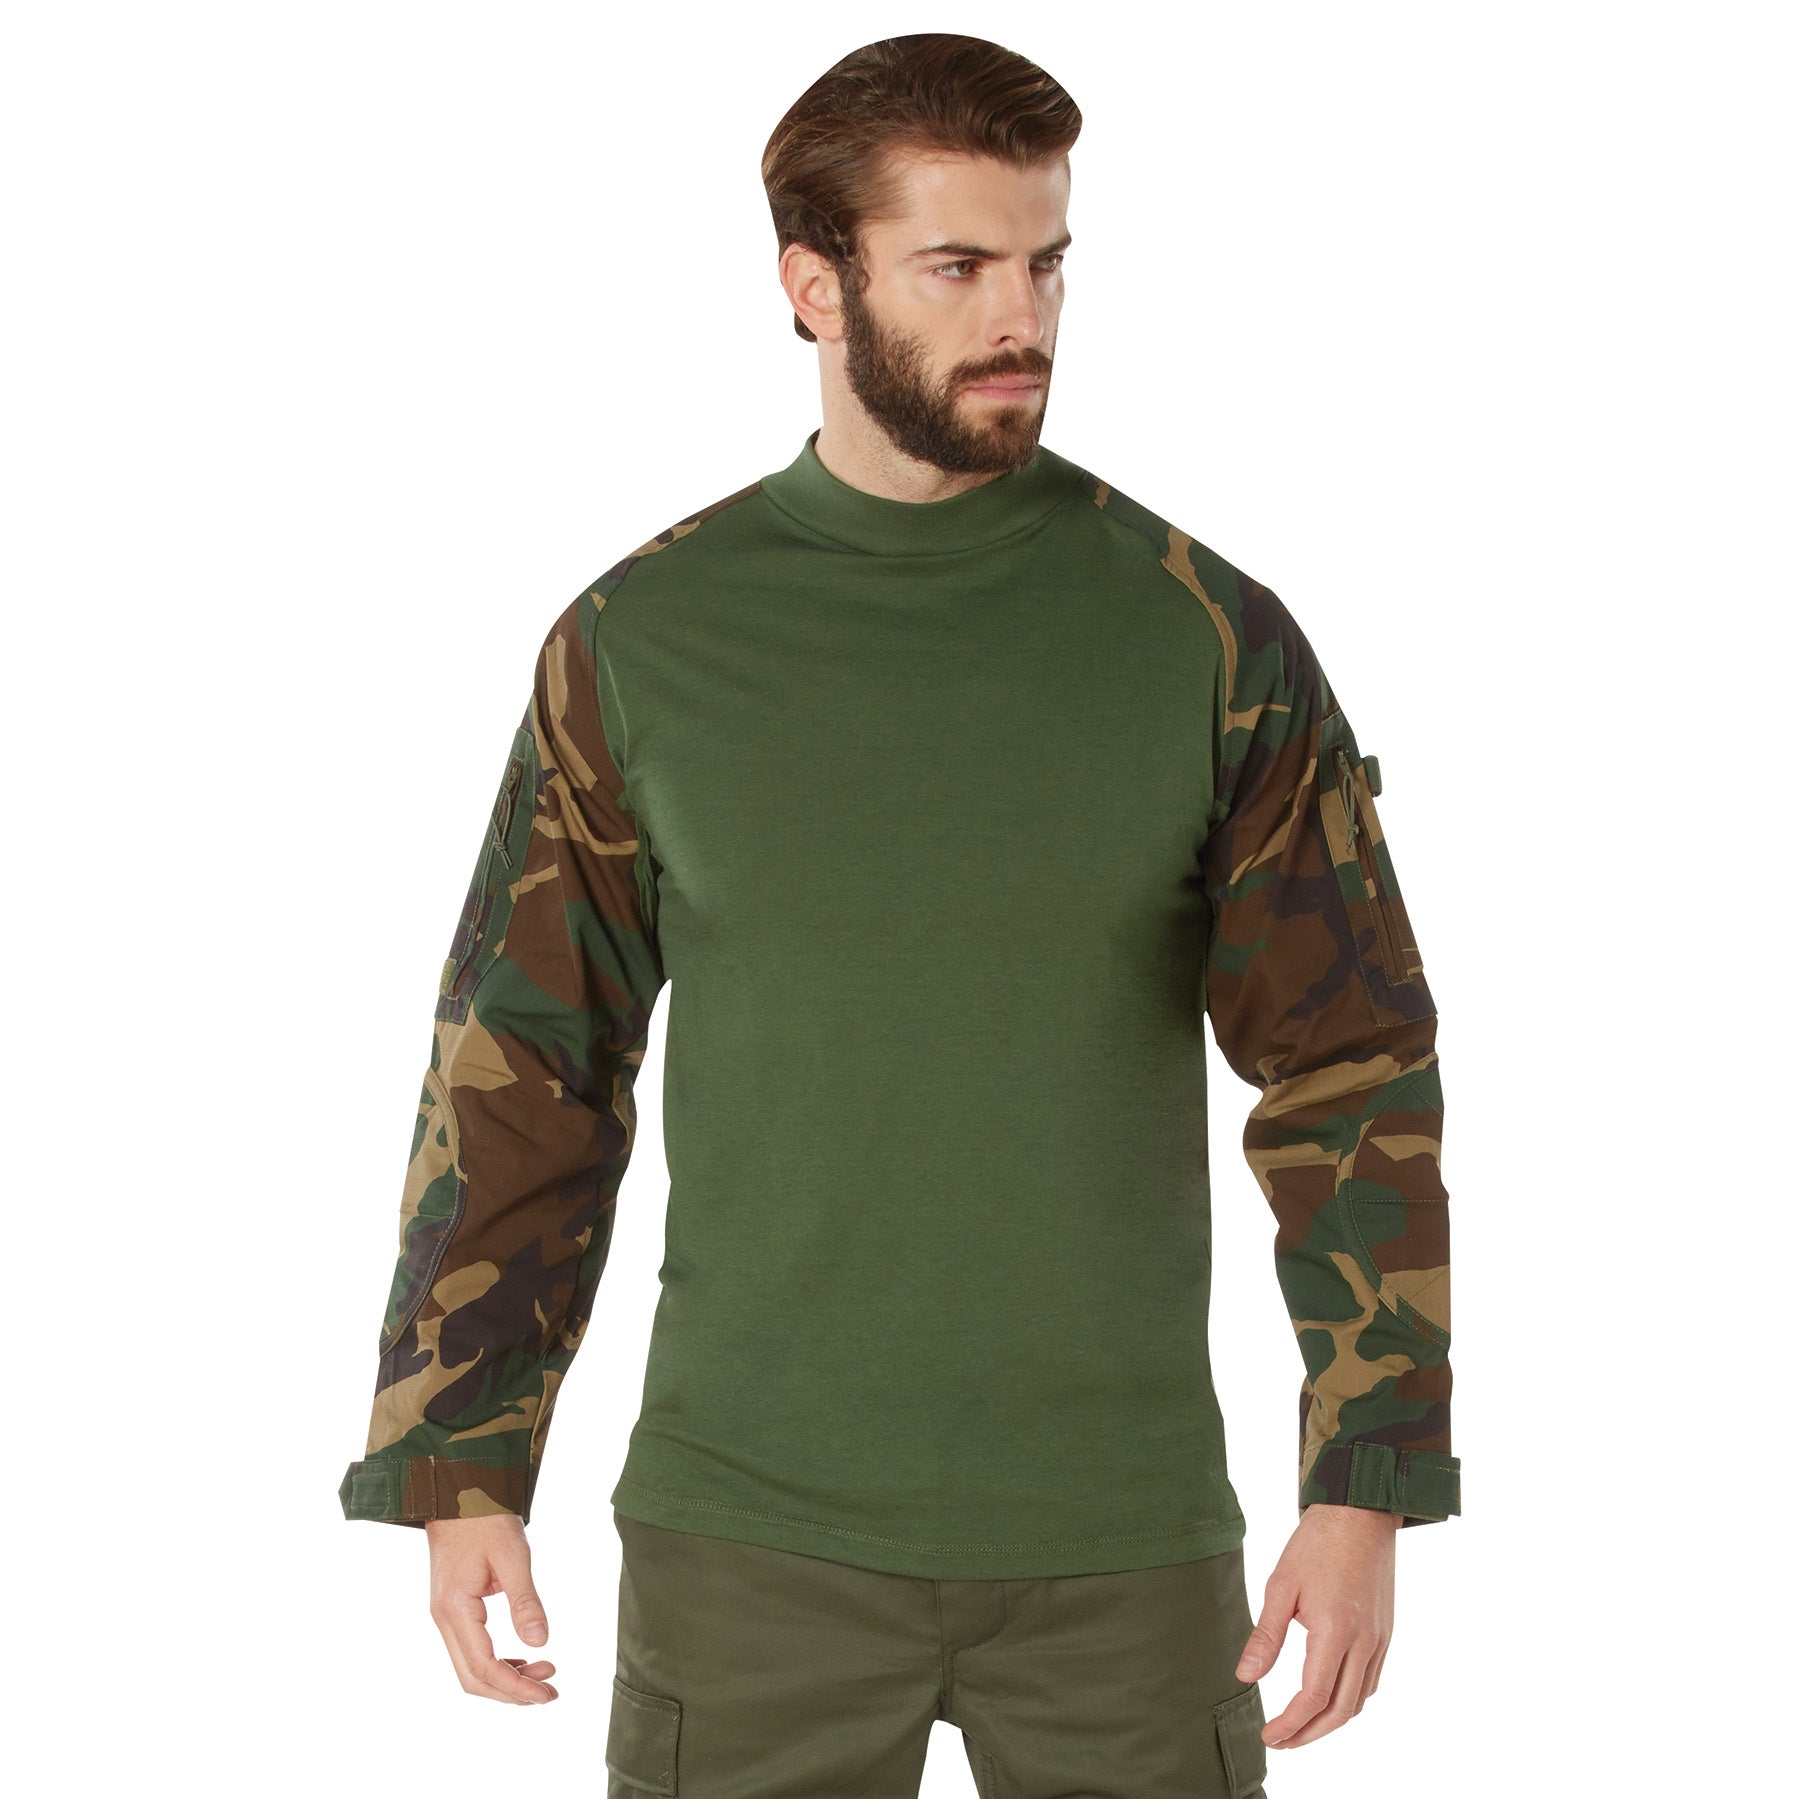 [Military][Fire Retardant] Camo Acrylic/Cotton/Nylon/Cotton Combat Shirts Woodland Camo